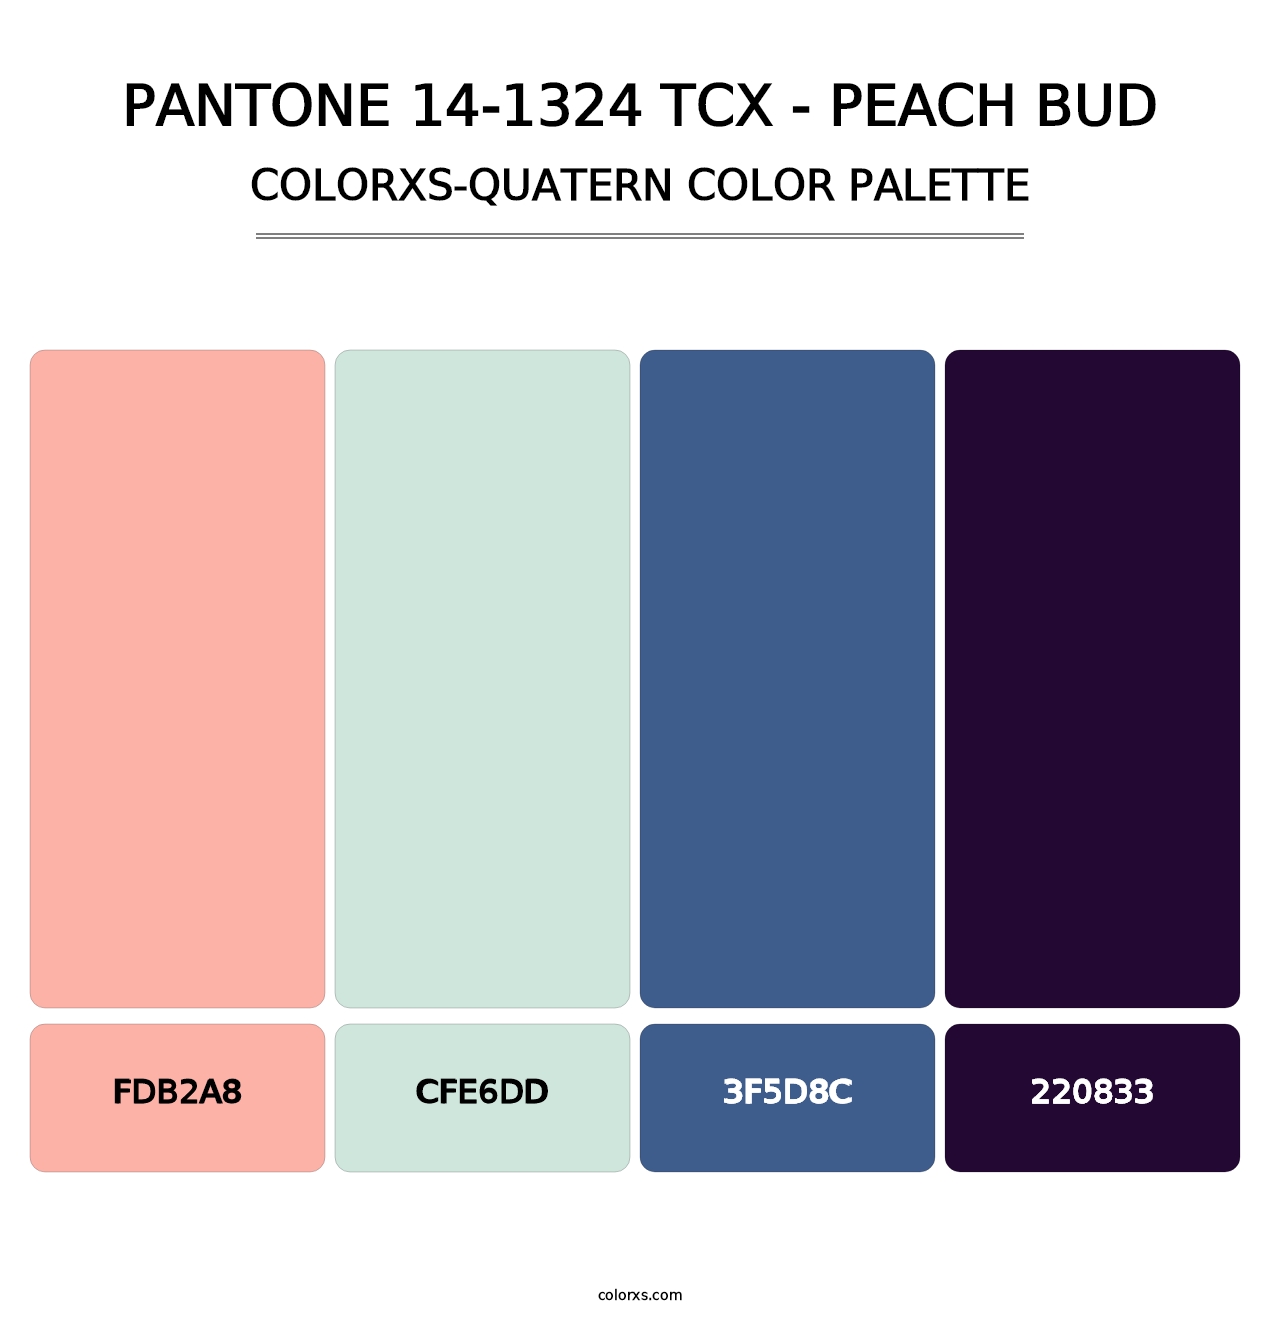 PANTONE 14-1324 TCX - Peach Bud - Colorxs Quatern Palette